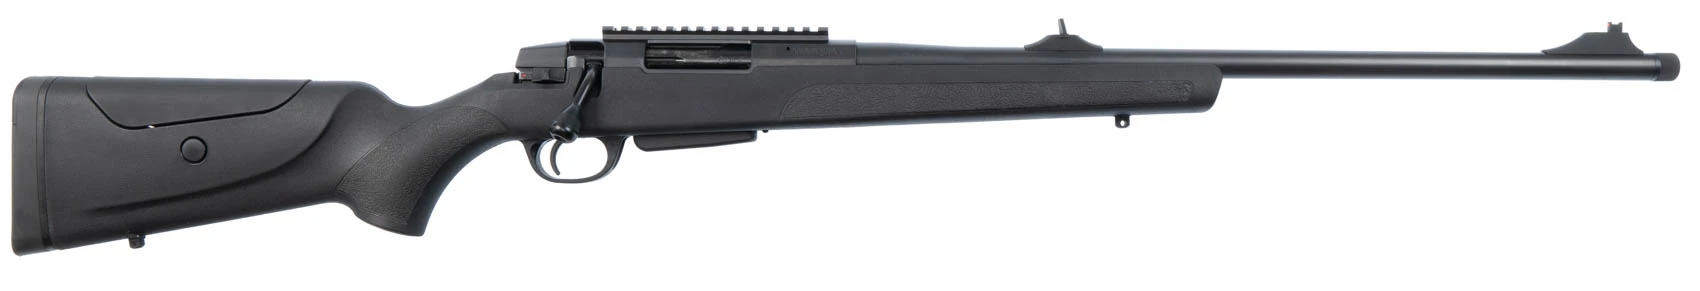 Карабин ATA Arms Turqua Synthetic Black (ложа пластик), к.308Win